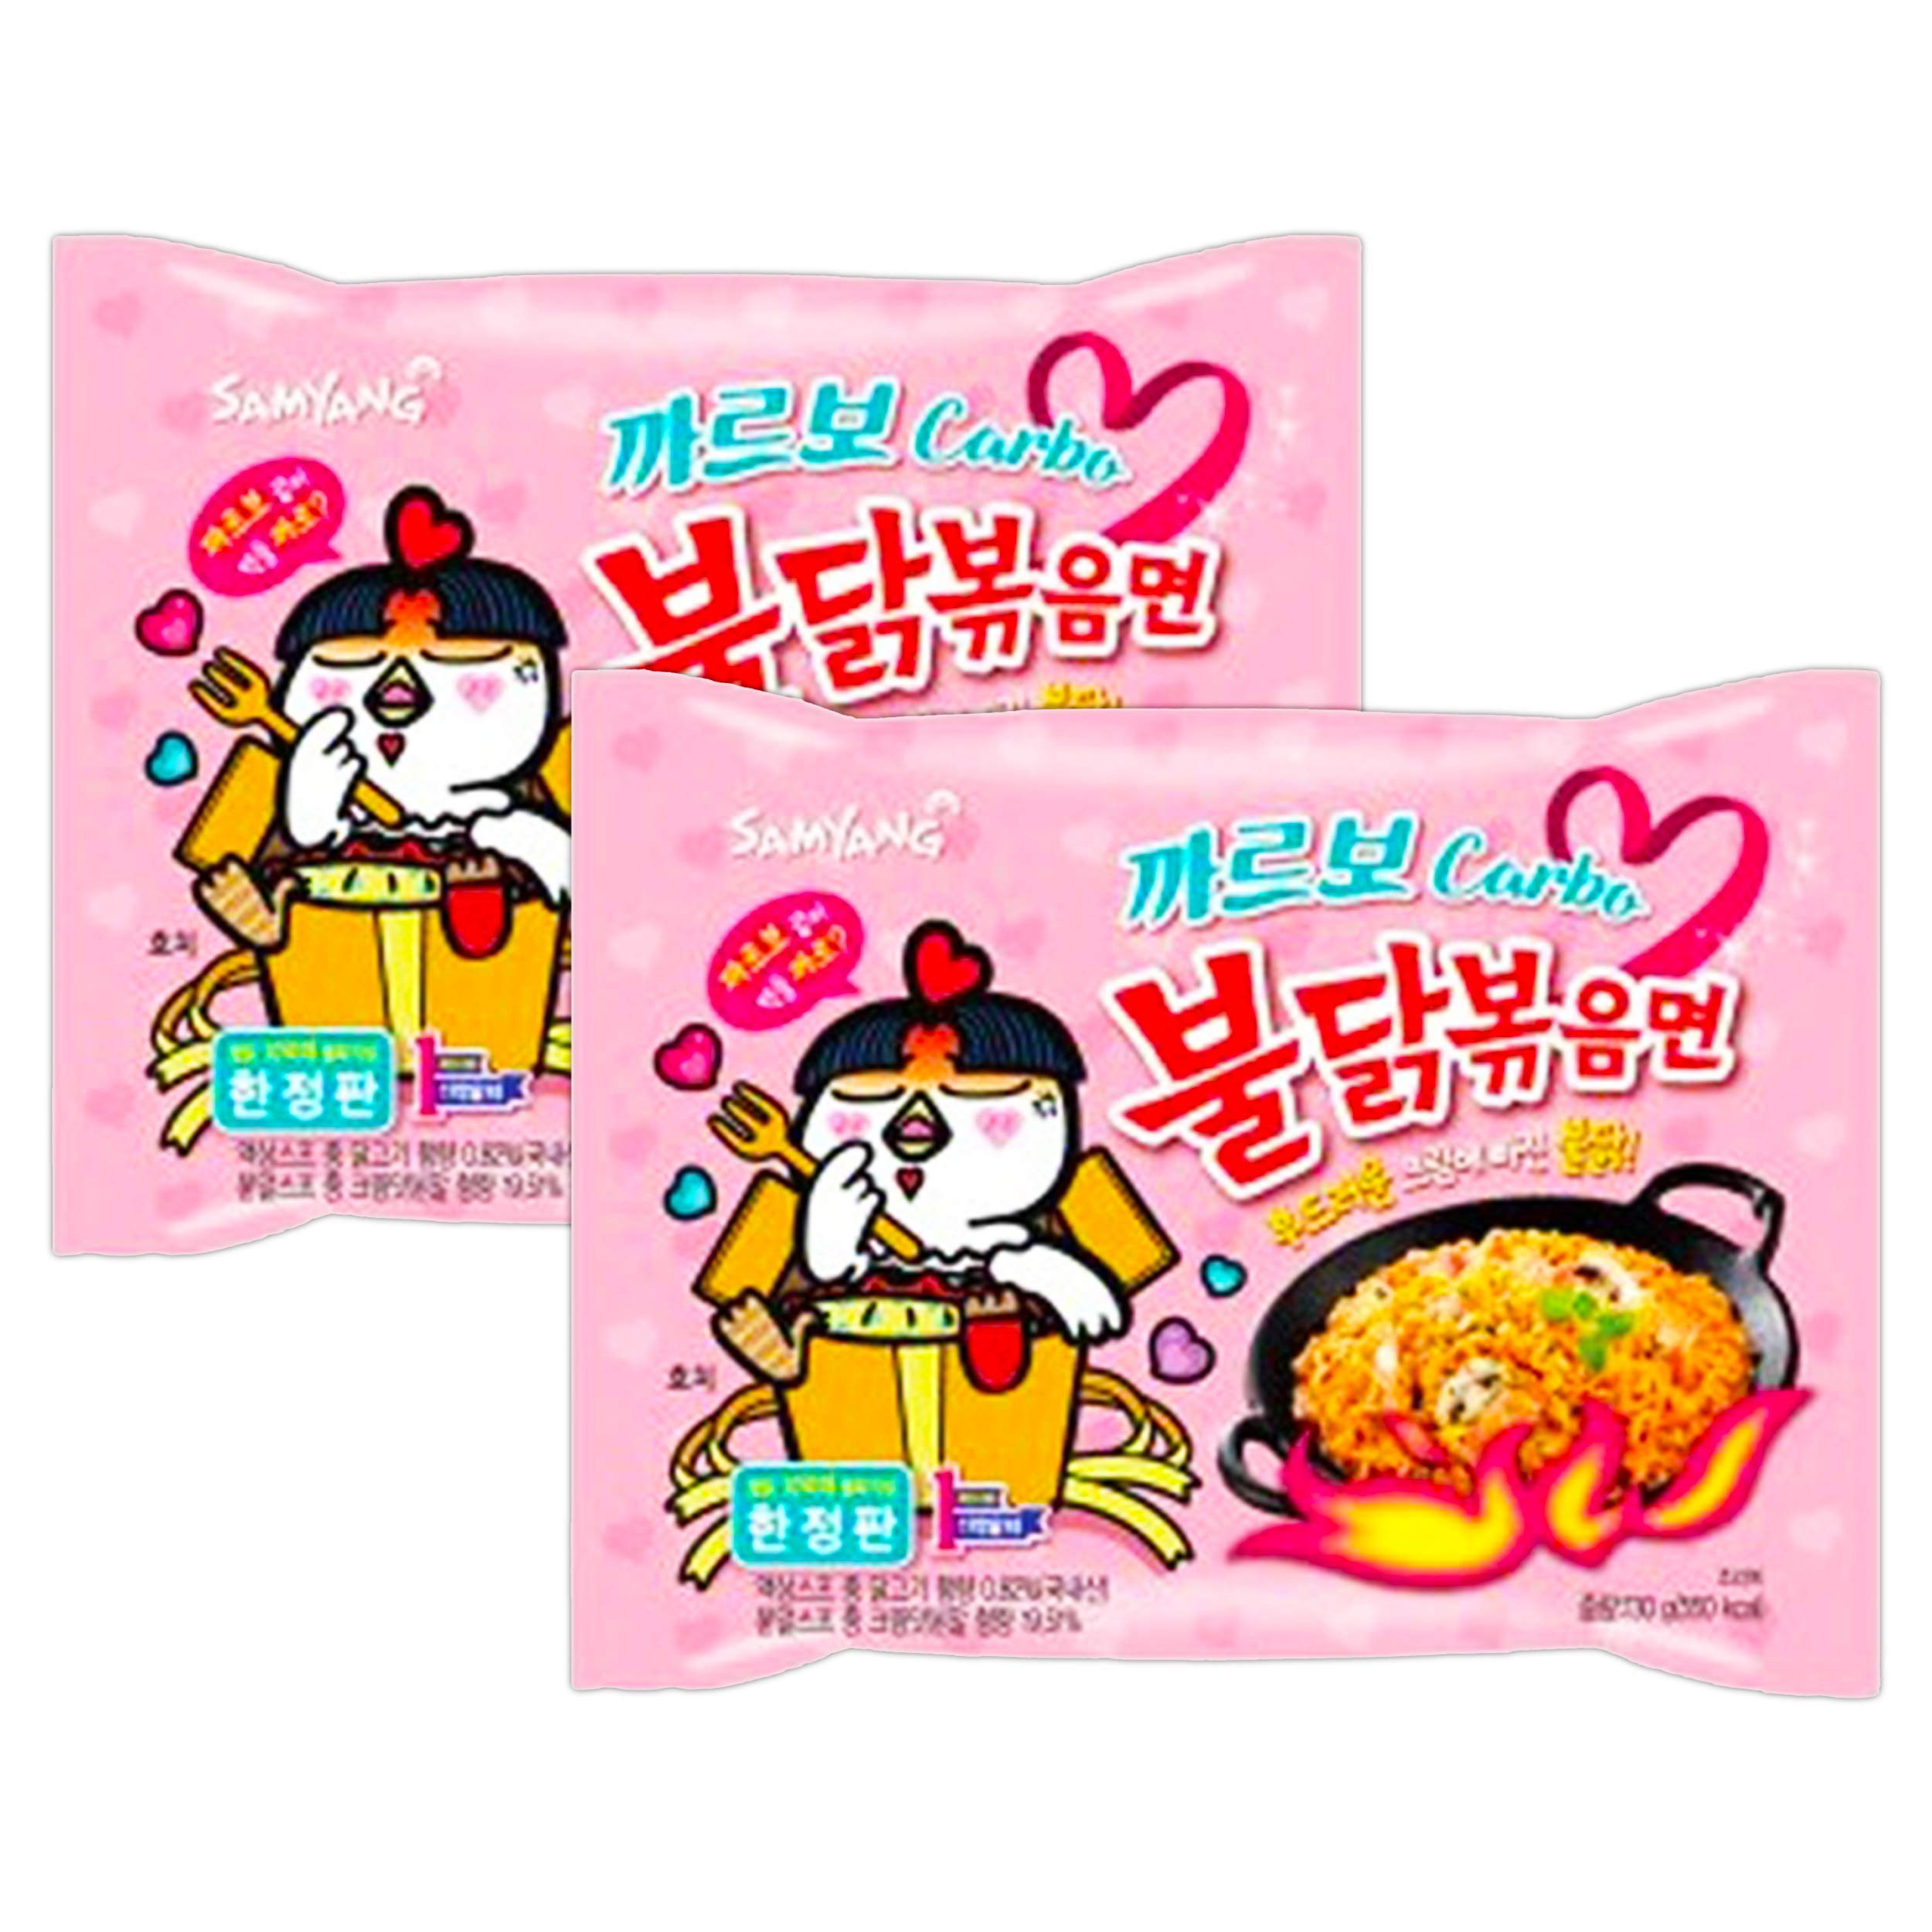 Samyang Ramen Korean Noodles Hot / Mild / Stir Fries / Soups (Buldak Carbo,  .2Pack) Buldak Carbo 4.58 Ounce (